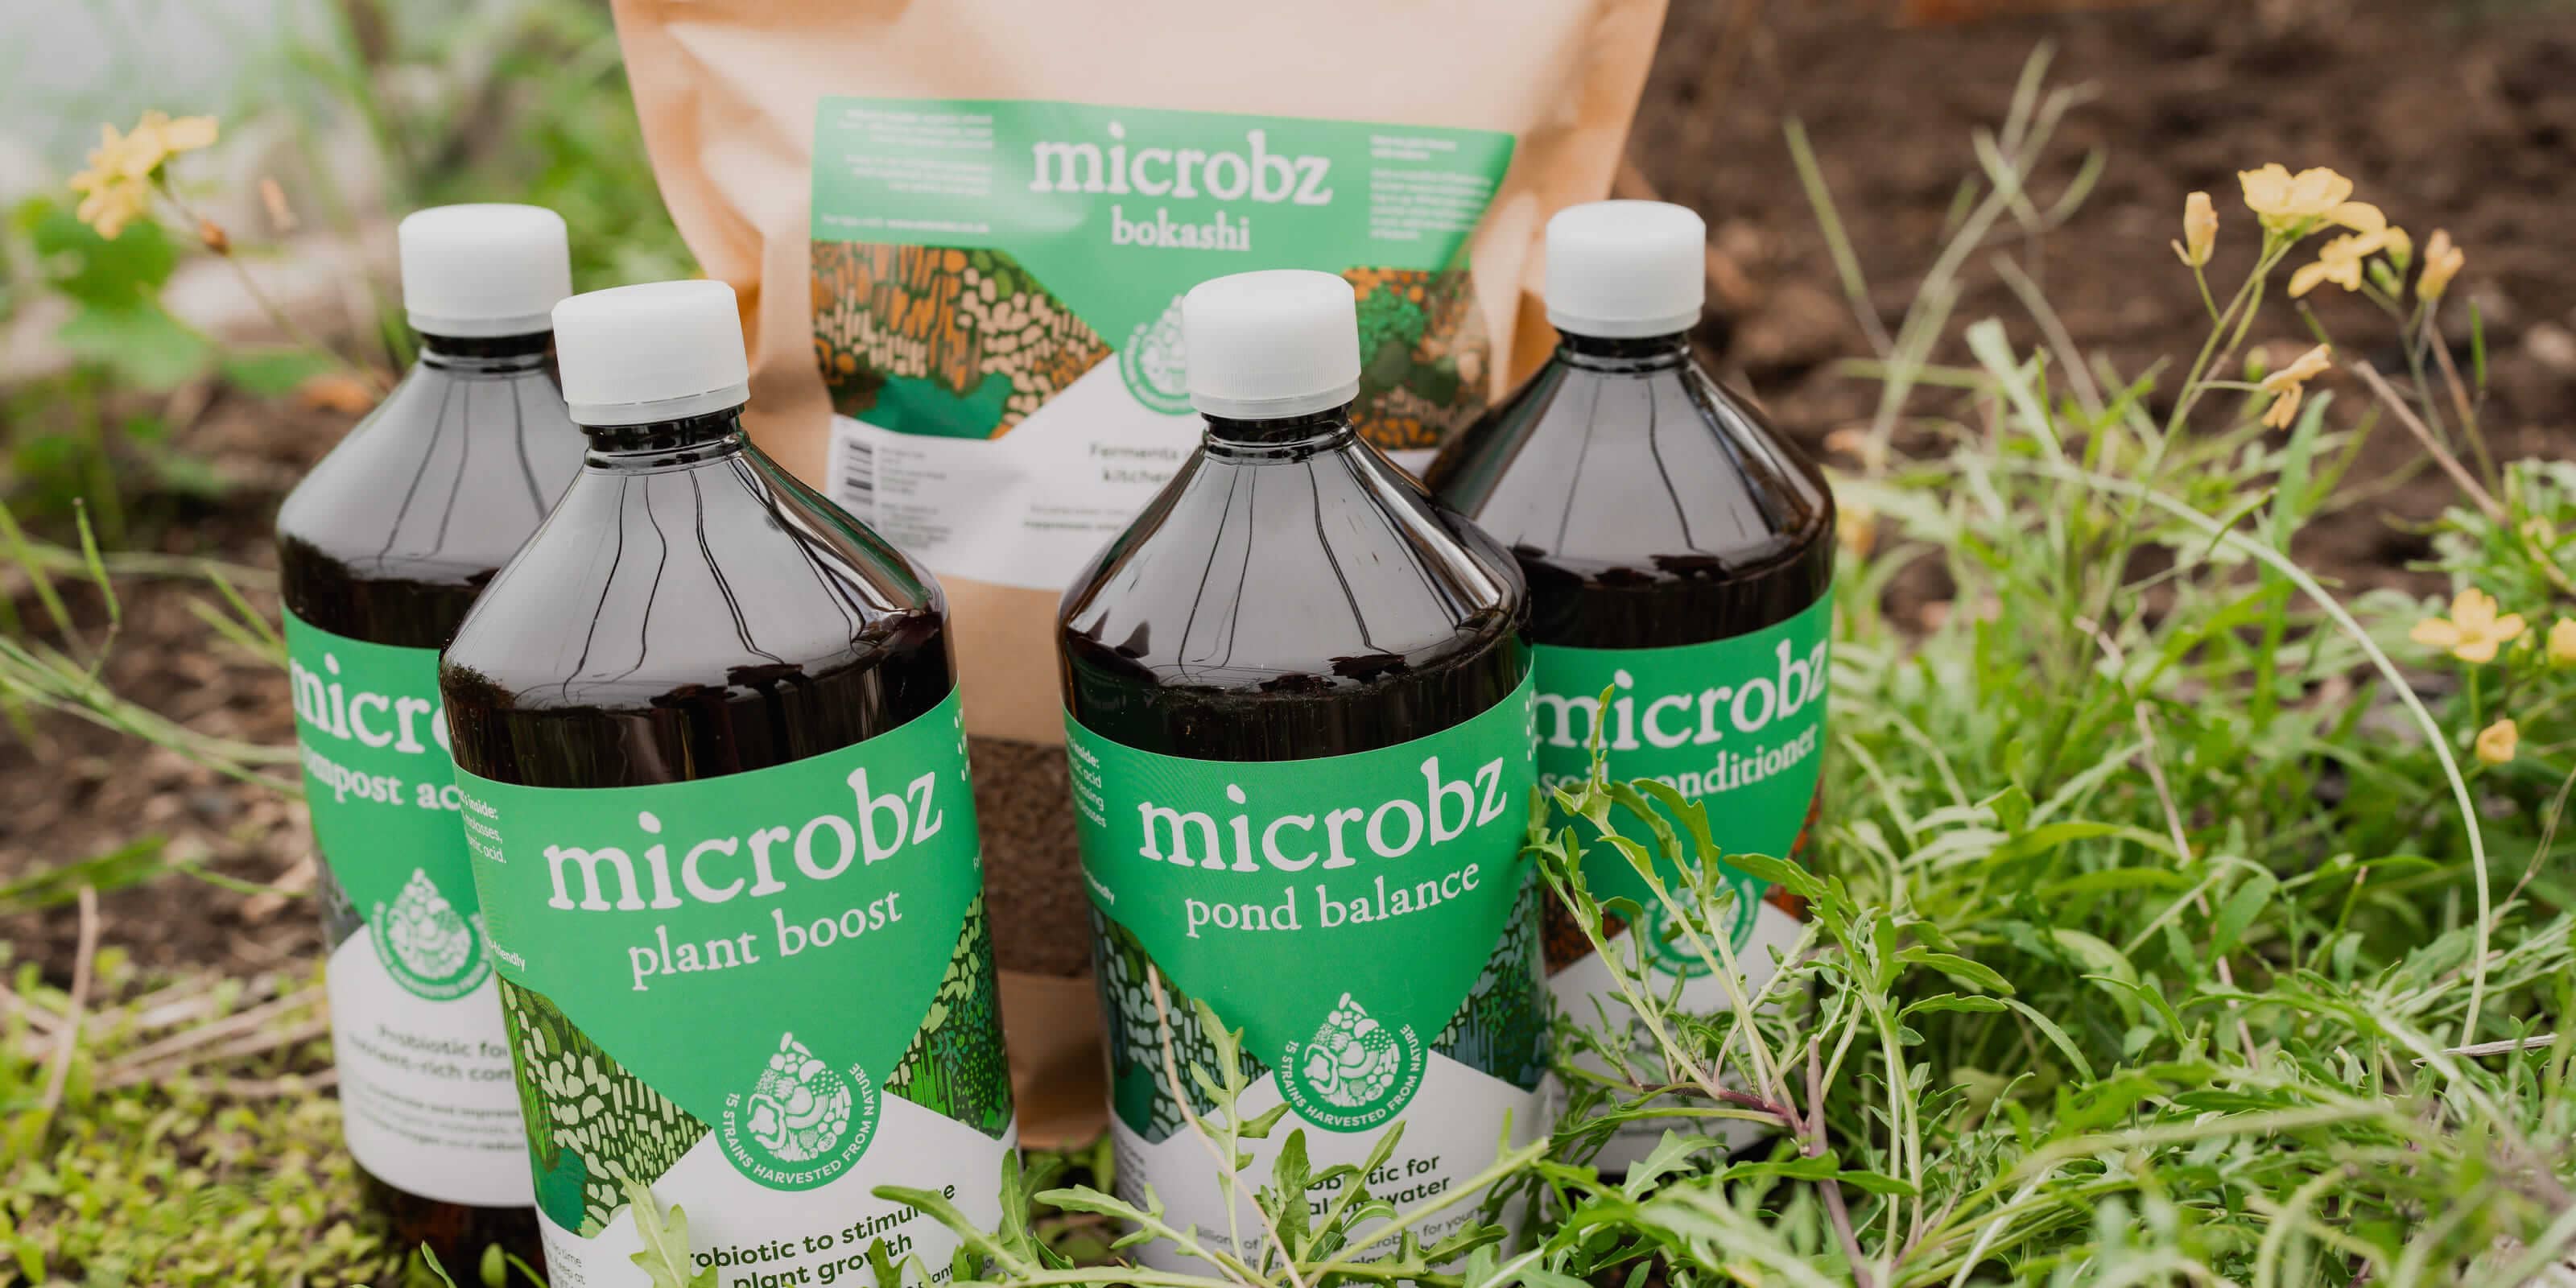 microbz plant boost, microbz pond balance, micobz bokashi in a raised garden bed